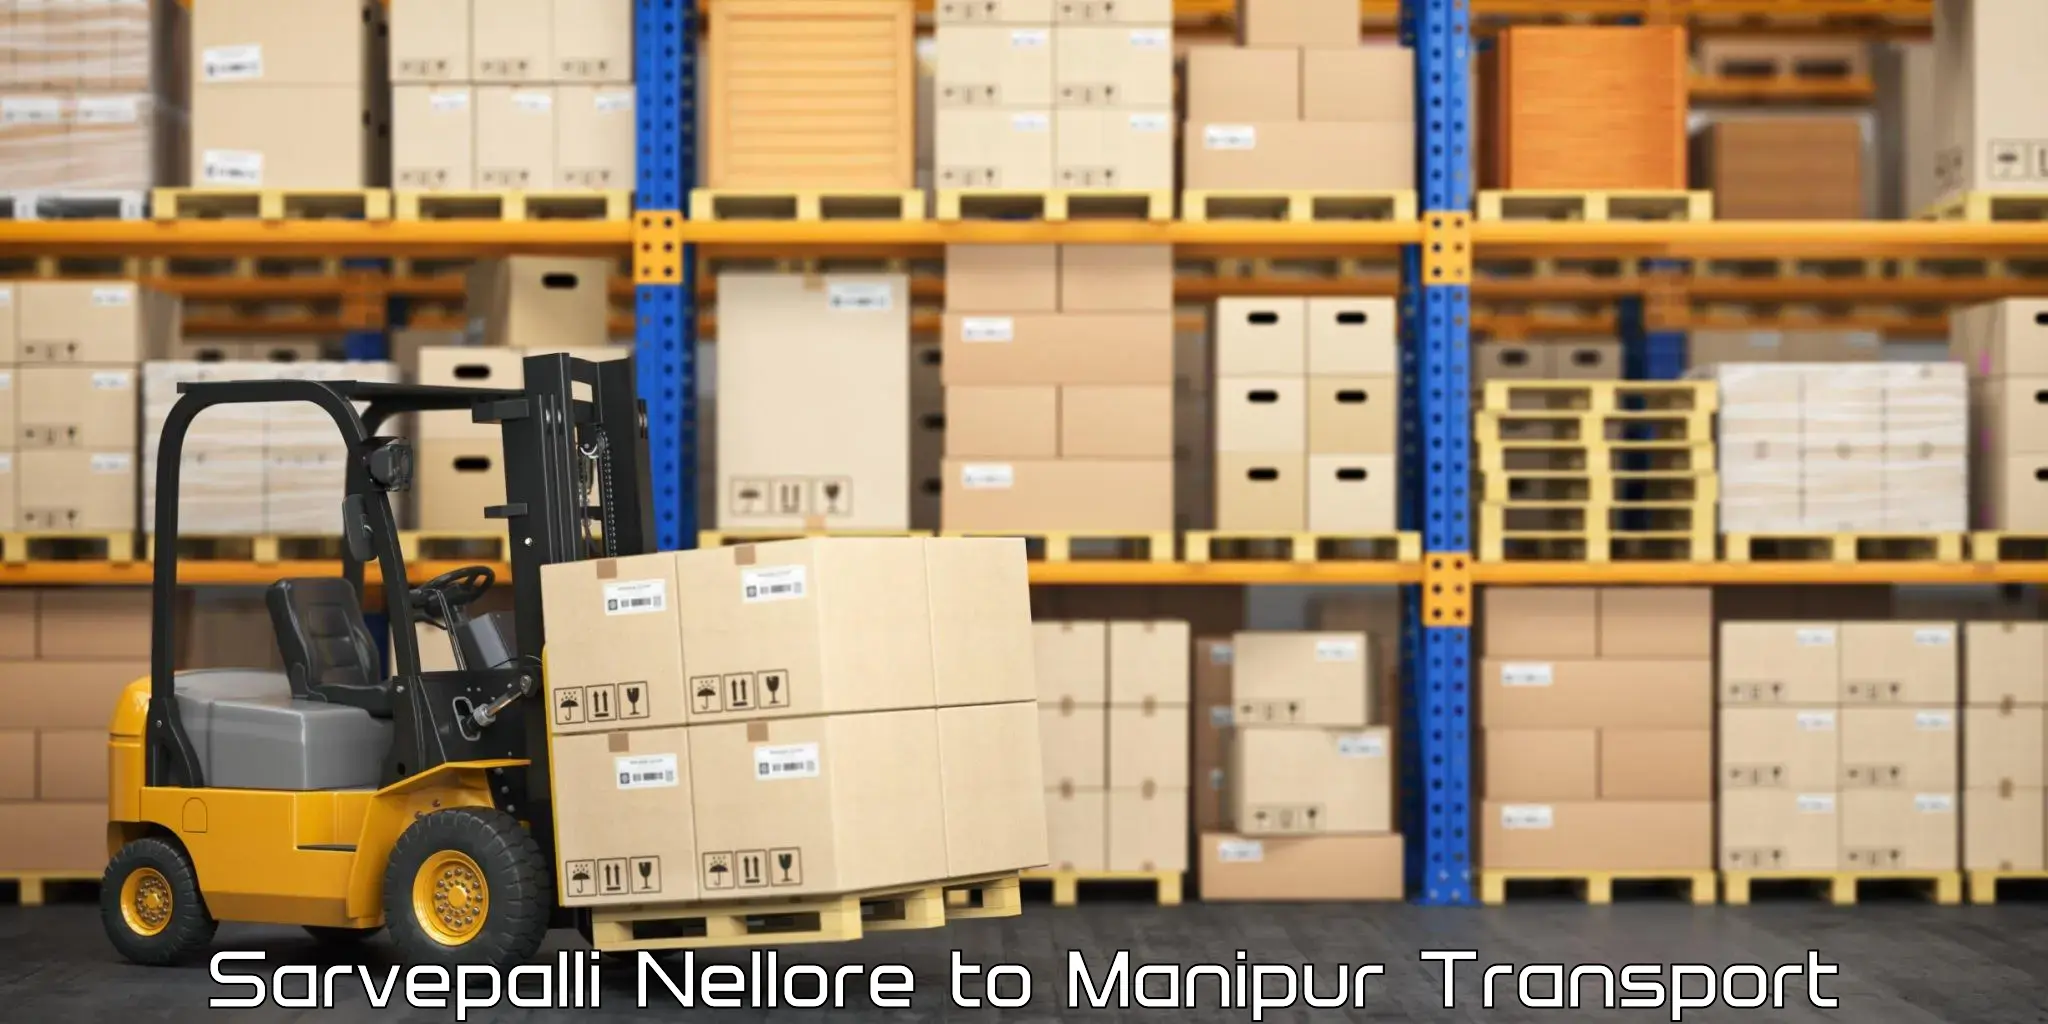 Goods delivery service Sarvepalli Nellore to Chandel